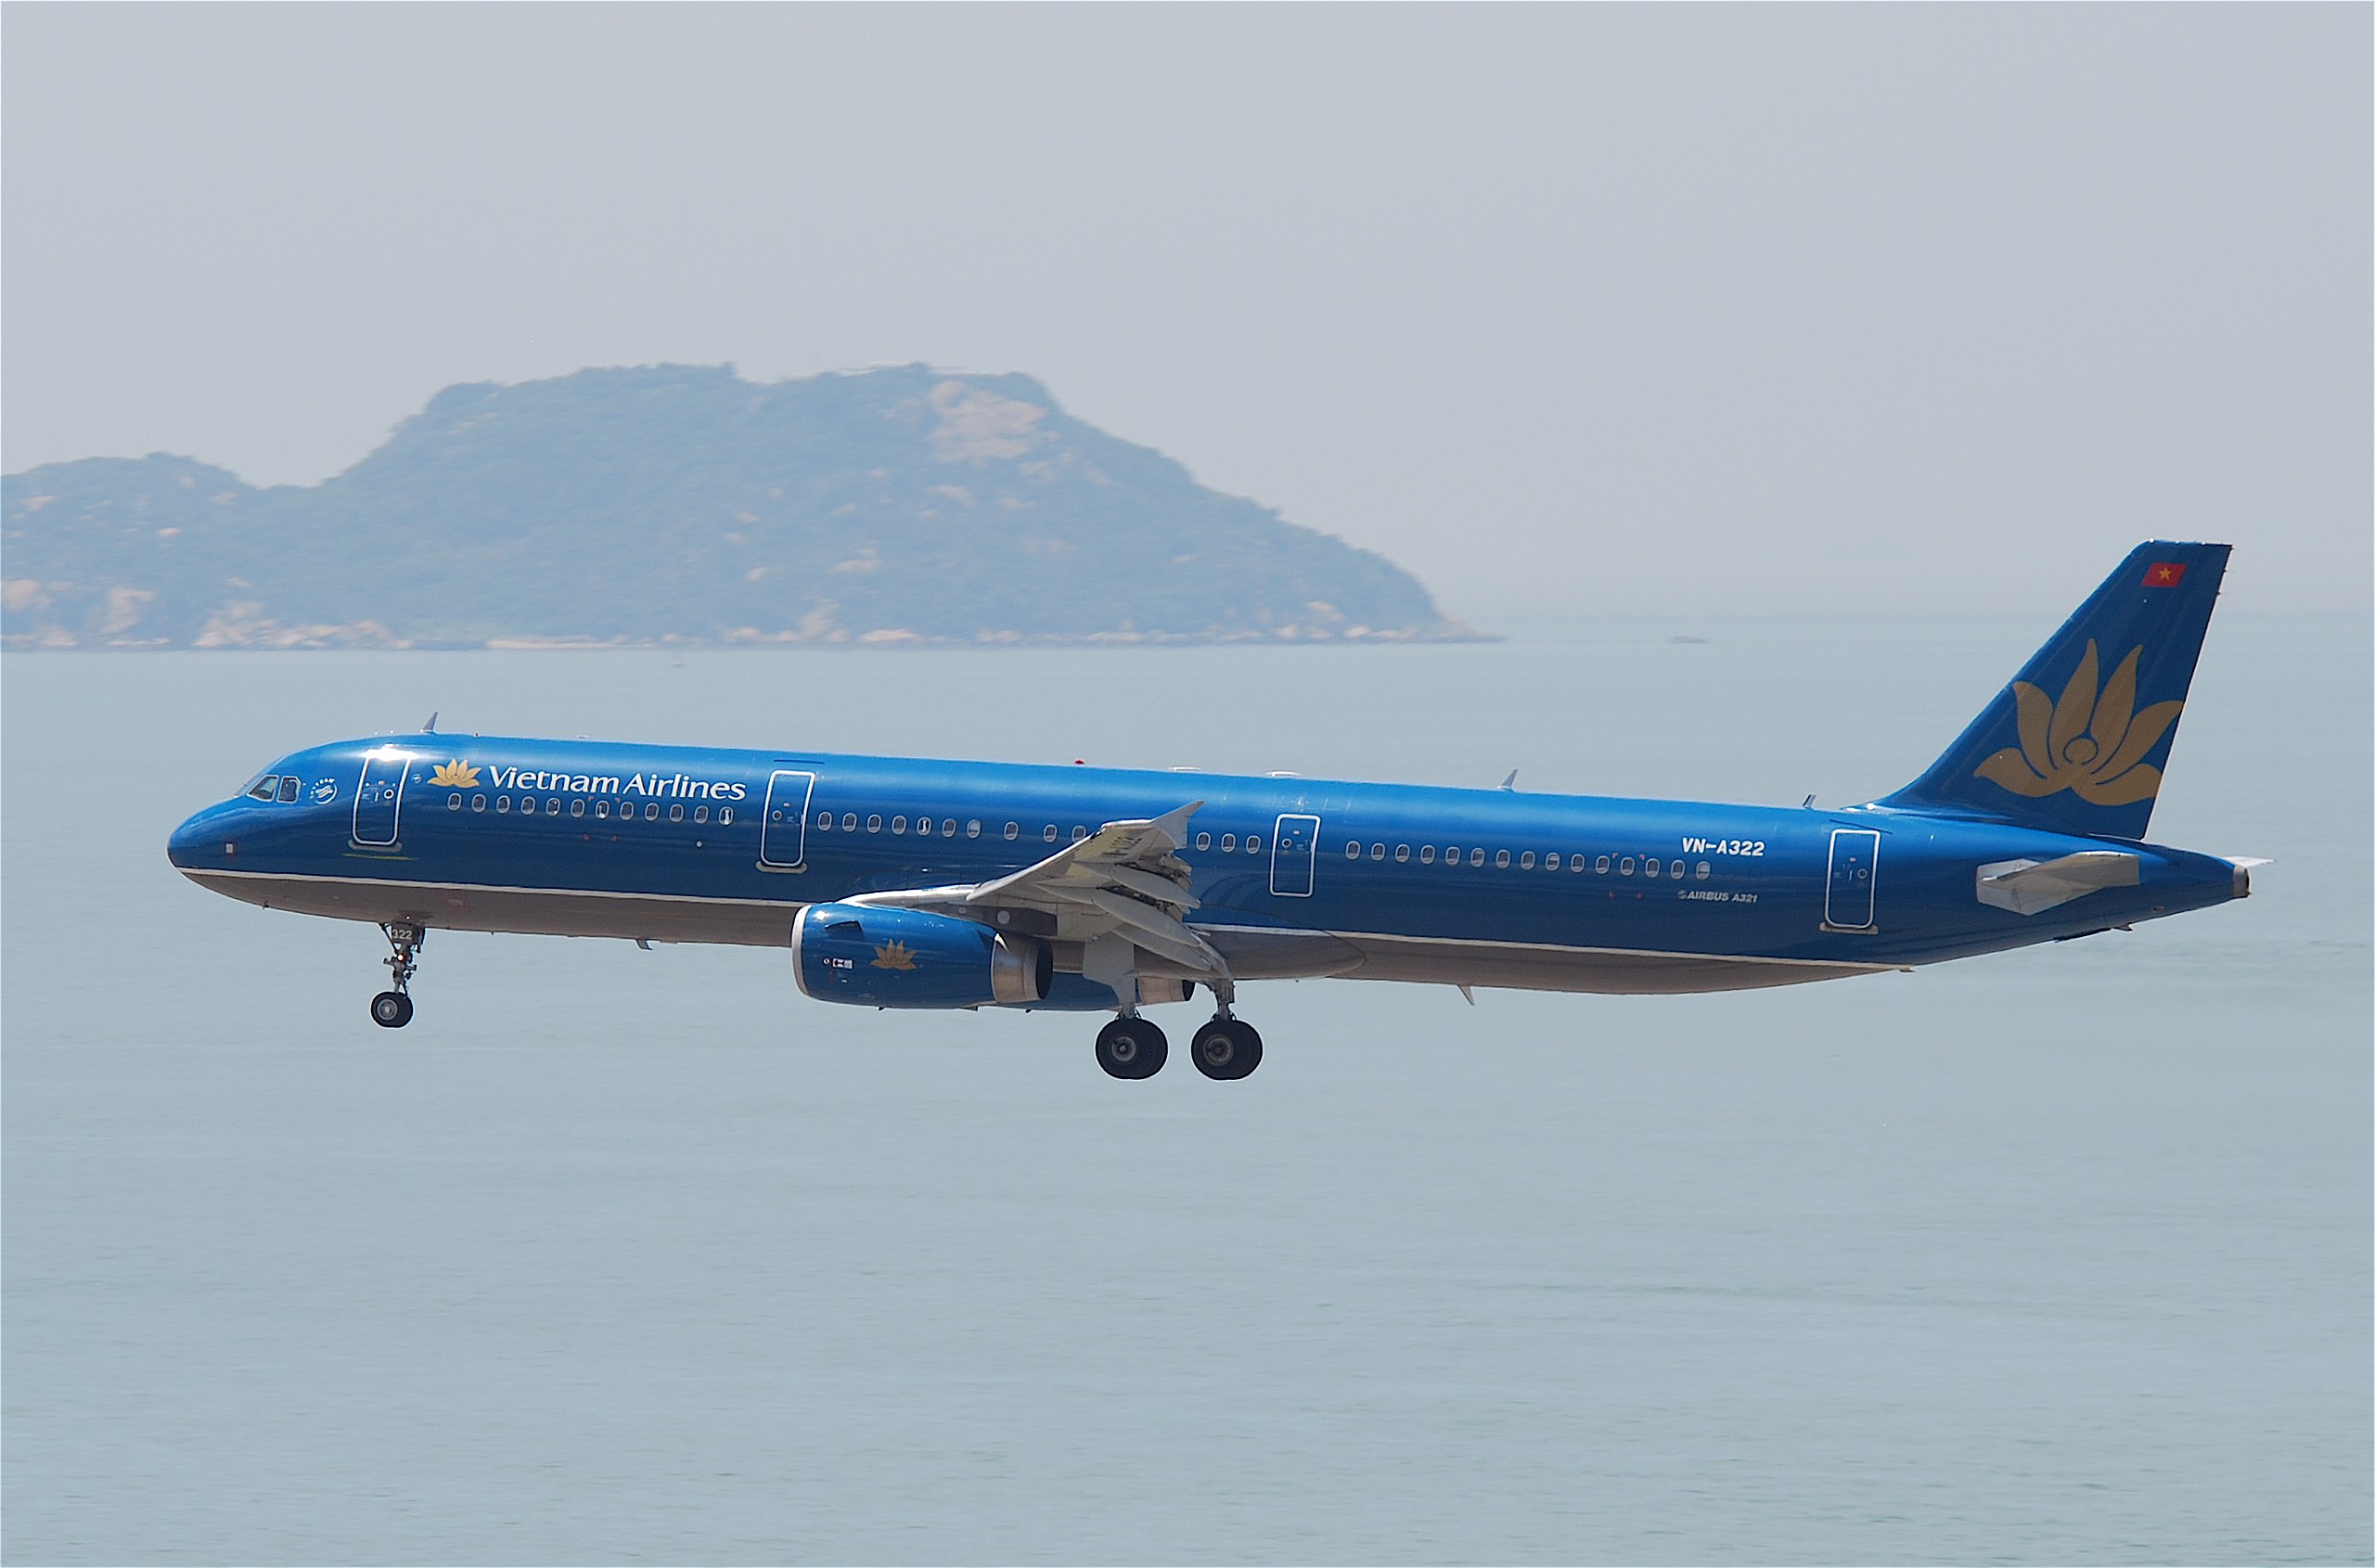 L'image illustre un vol Vietnam airlines.